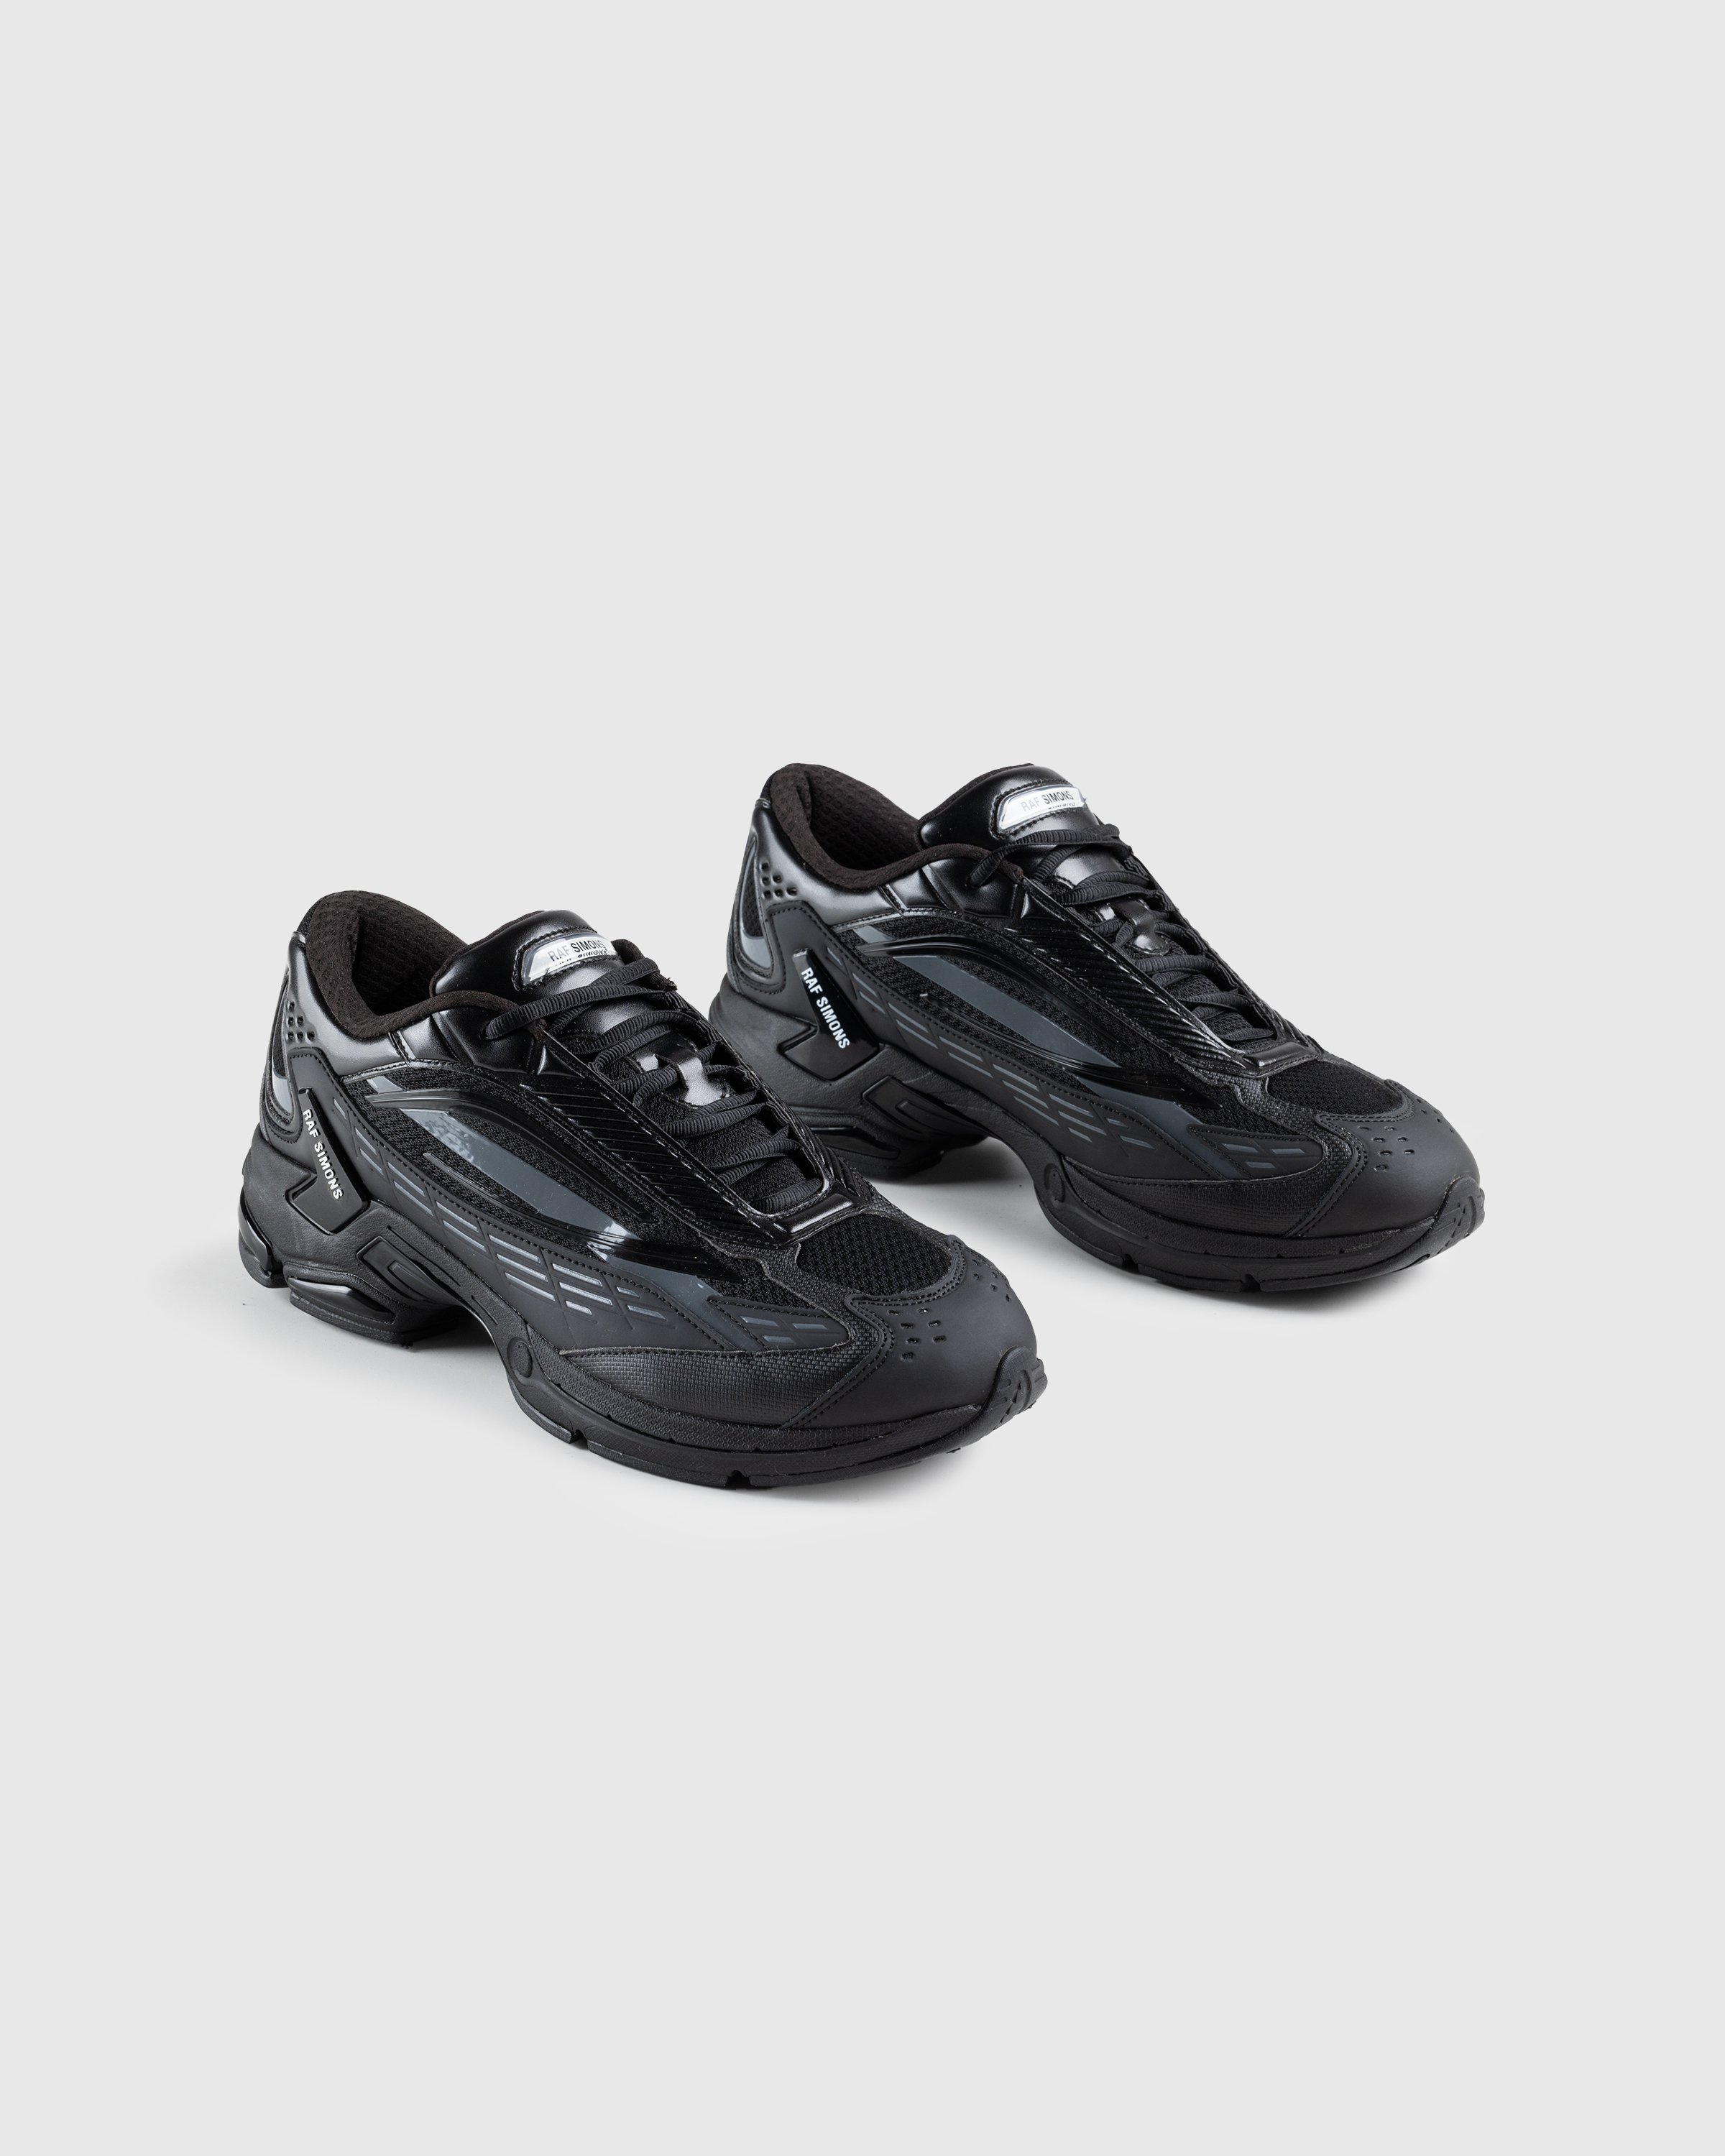 Raf Simons - Ultrasceptre Sneaker Black - Footwear - Black - Image 3